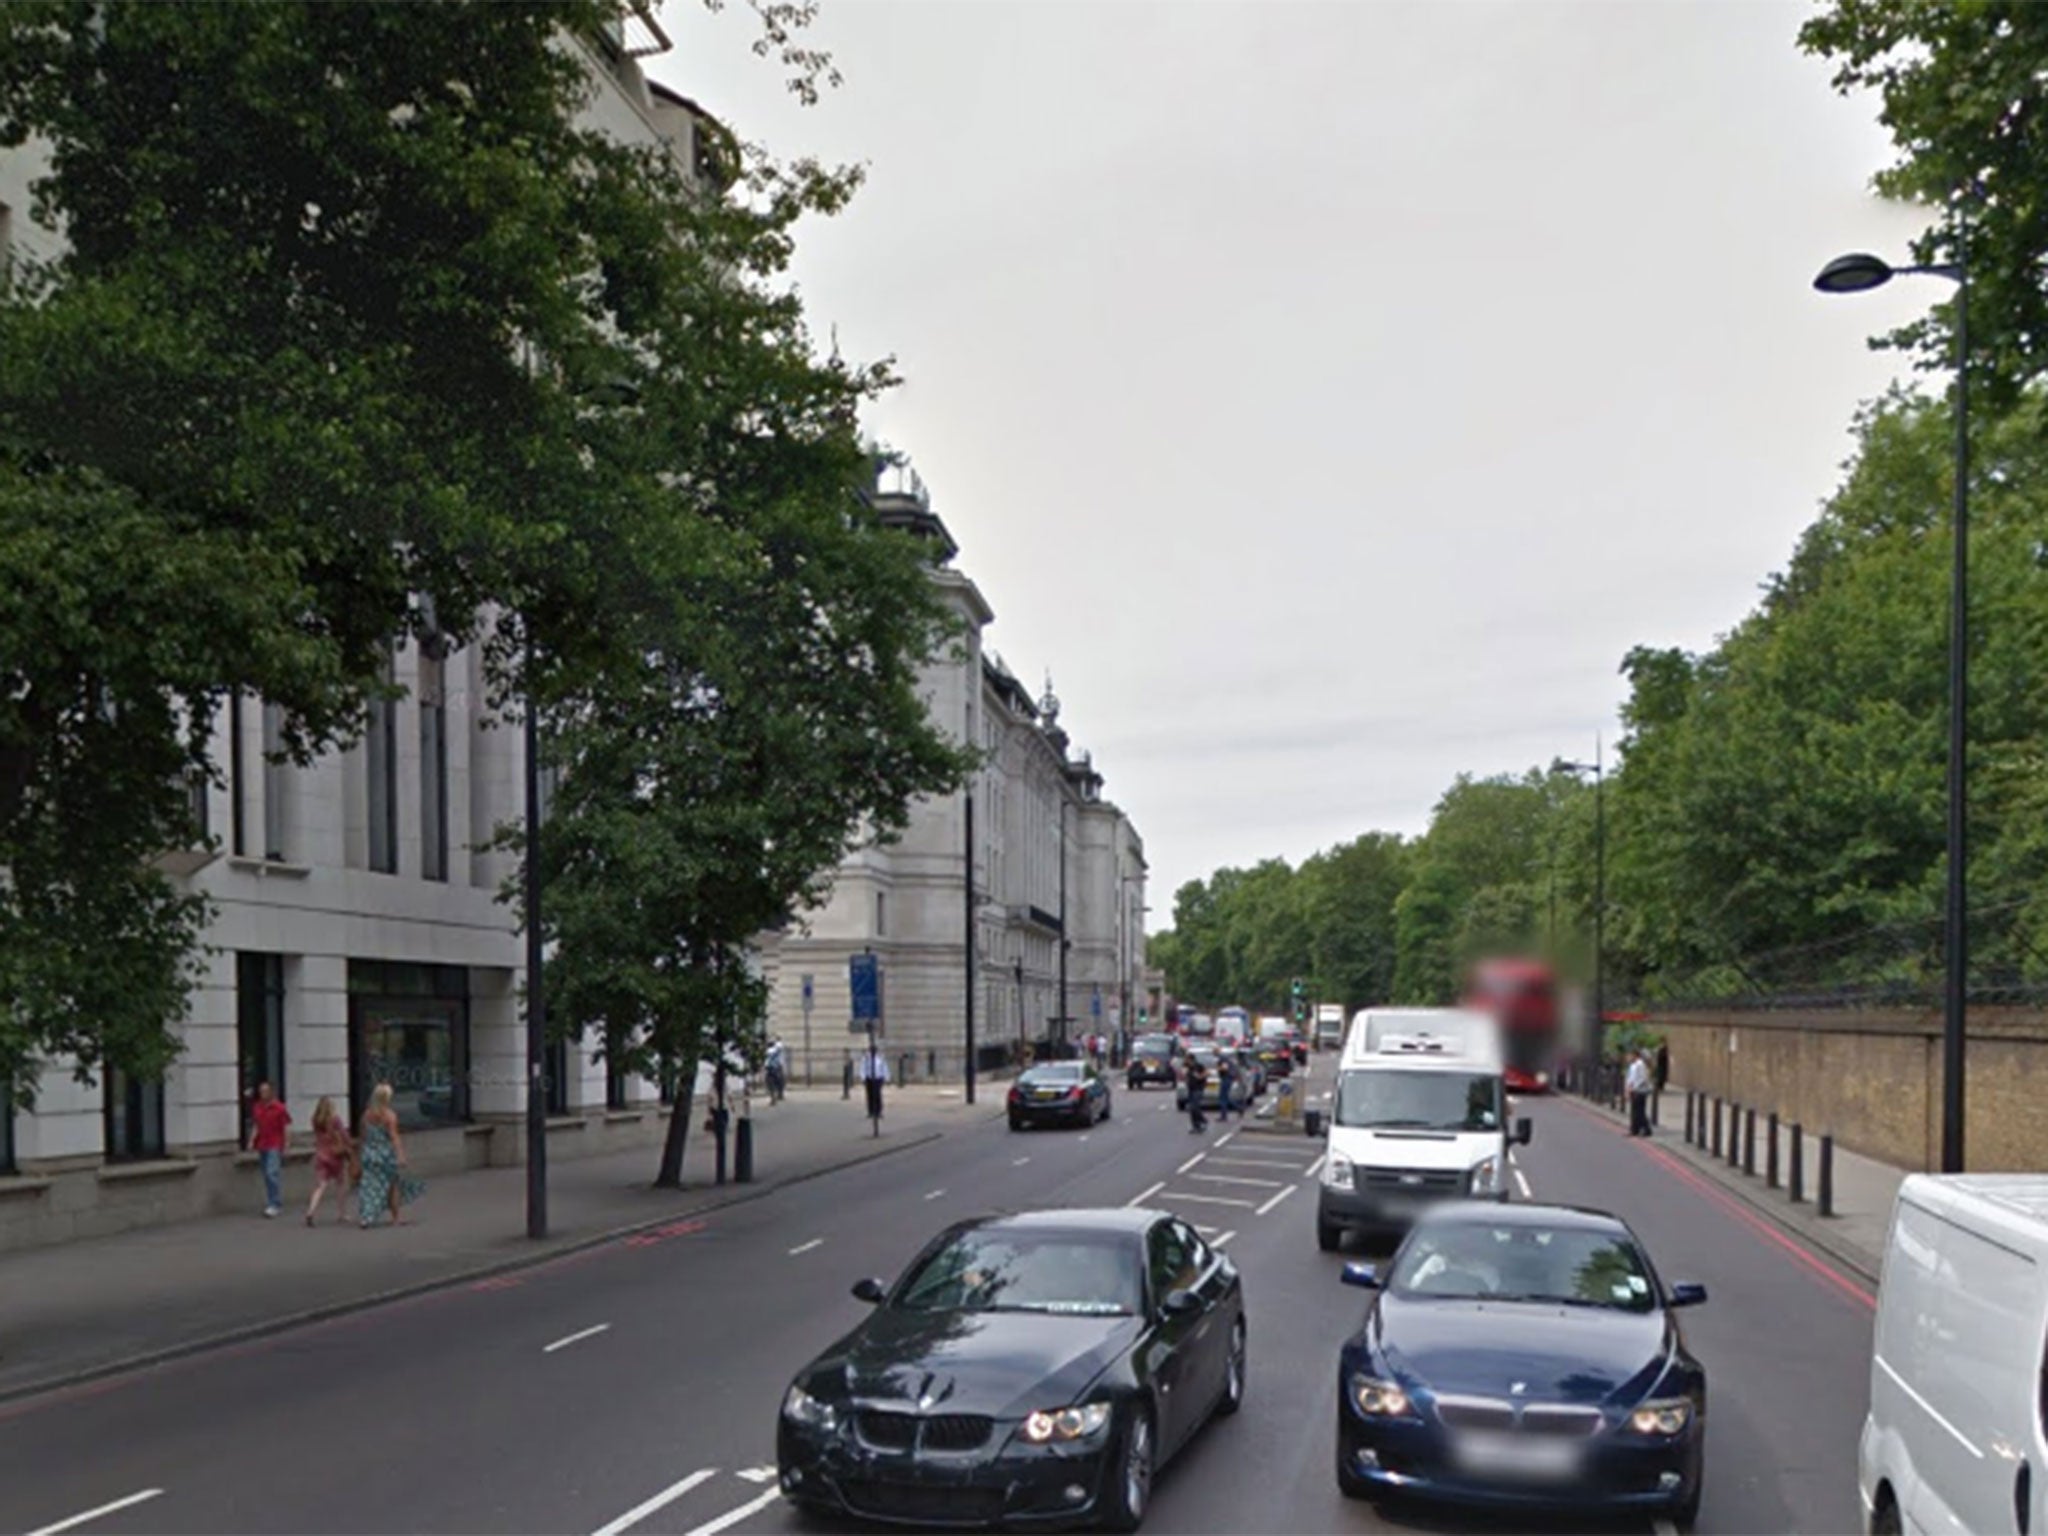 File image of Grosvenor Place near Buckingham Palace in London